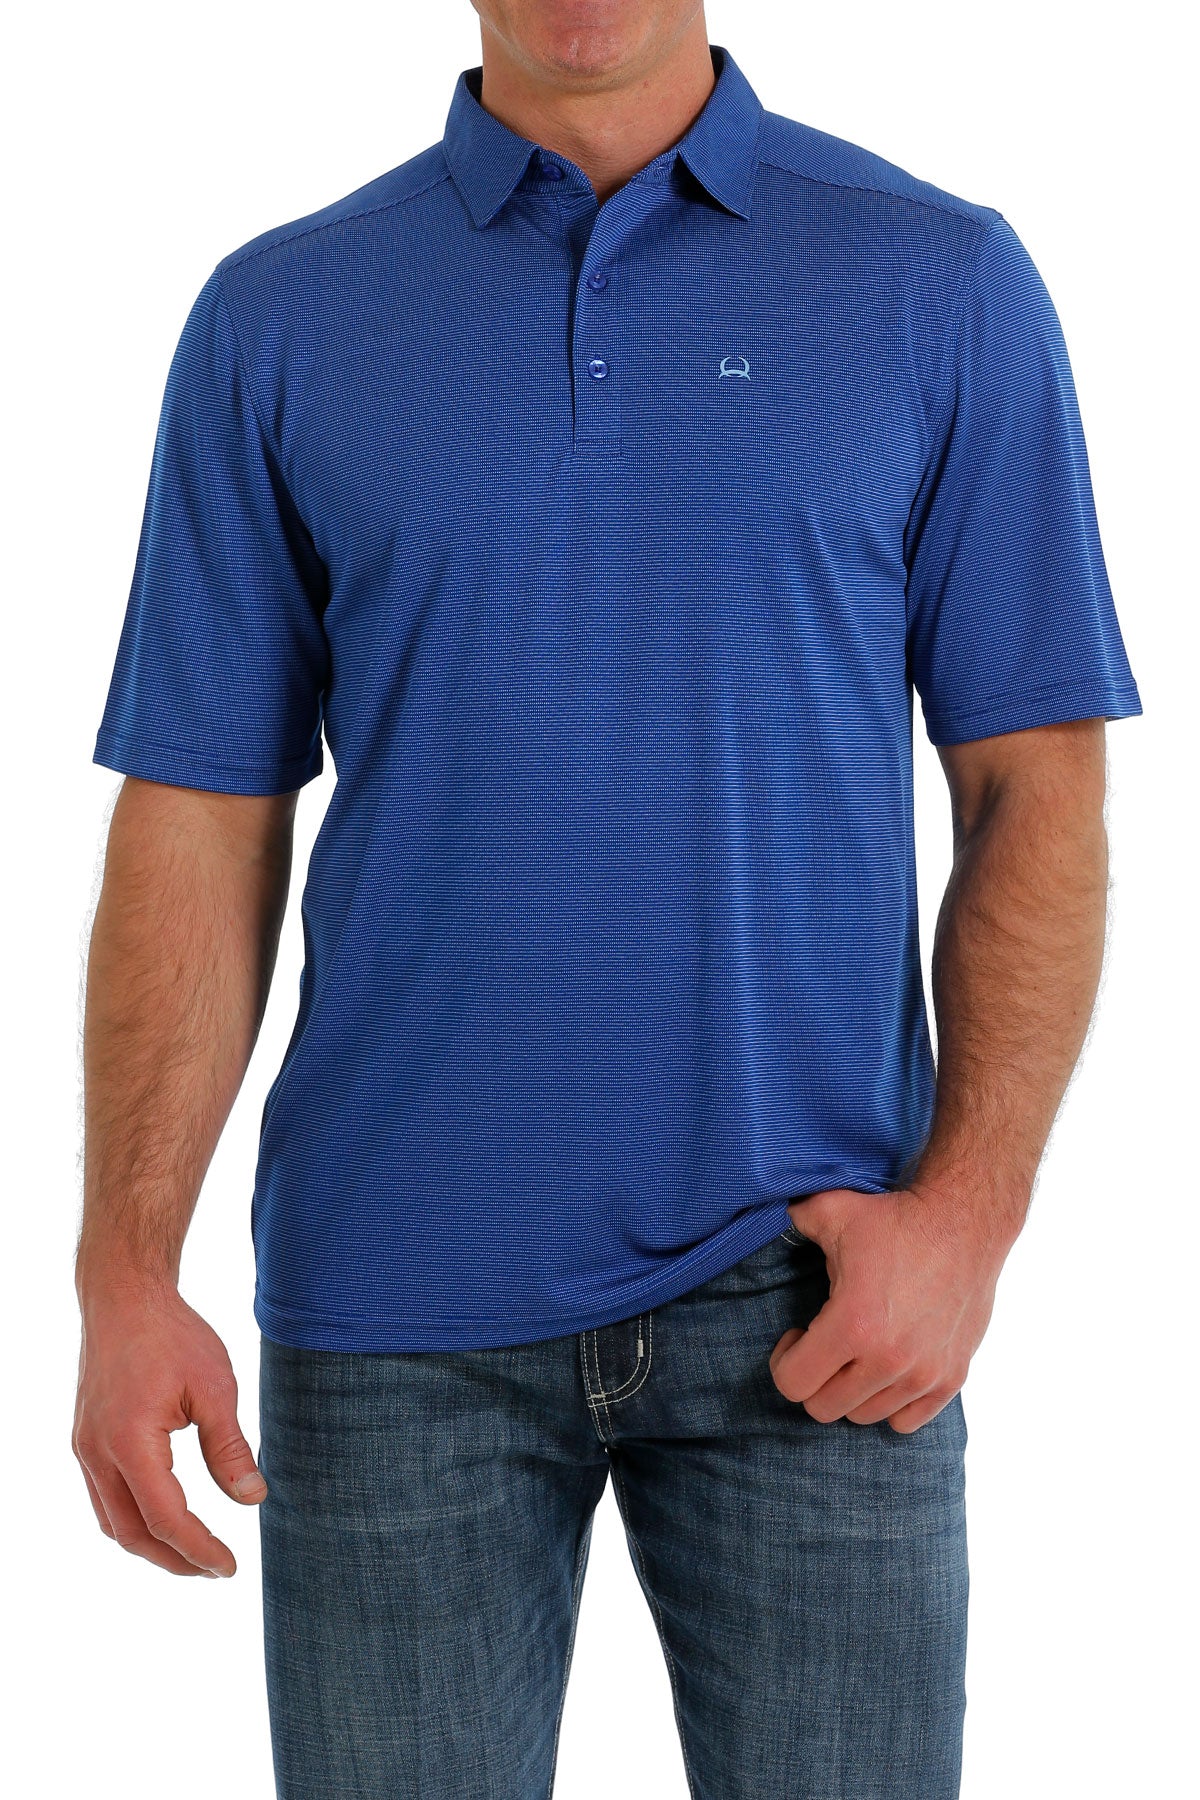 CINCH Men's SS Royal Blue ARENAFLEX Polo Shirt